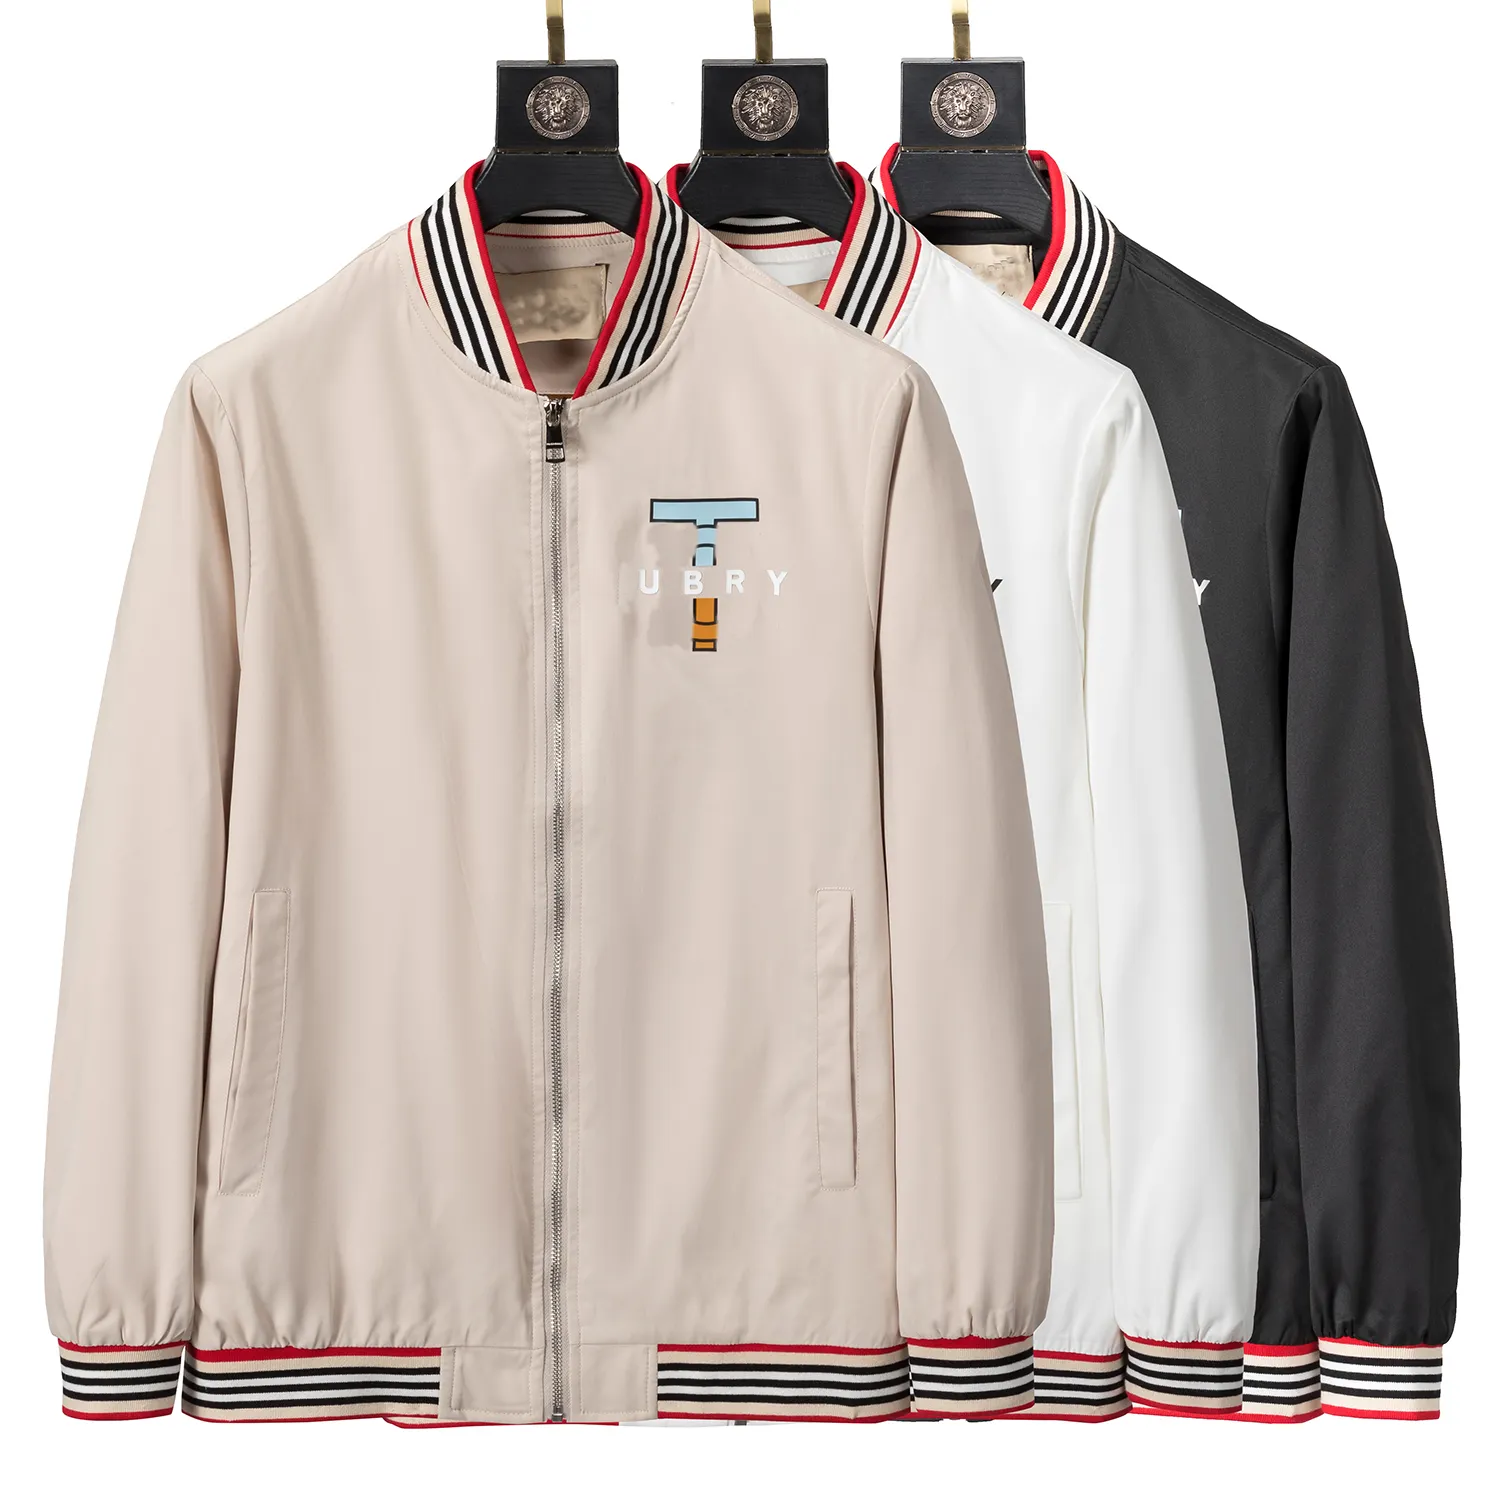 23aaaafashion 브랜드 Mens 재킷 측면 배지 자수 자수 편지 지퍼 코트 빈티지 캐주얼 멀티 포켓 재킷 코트